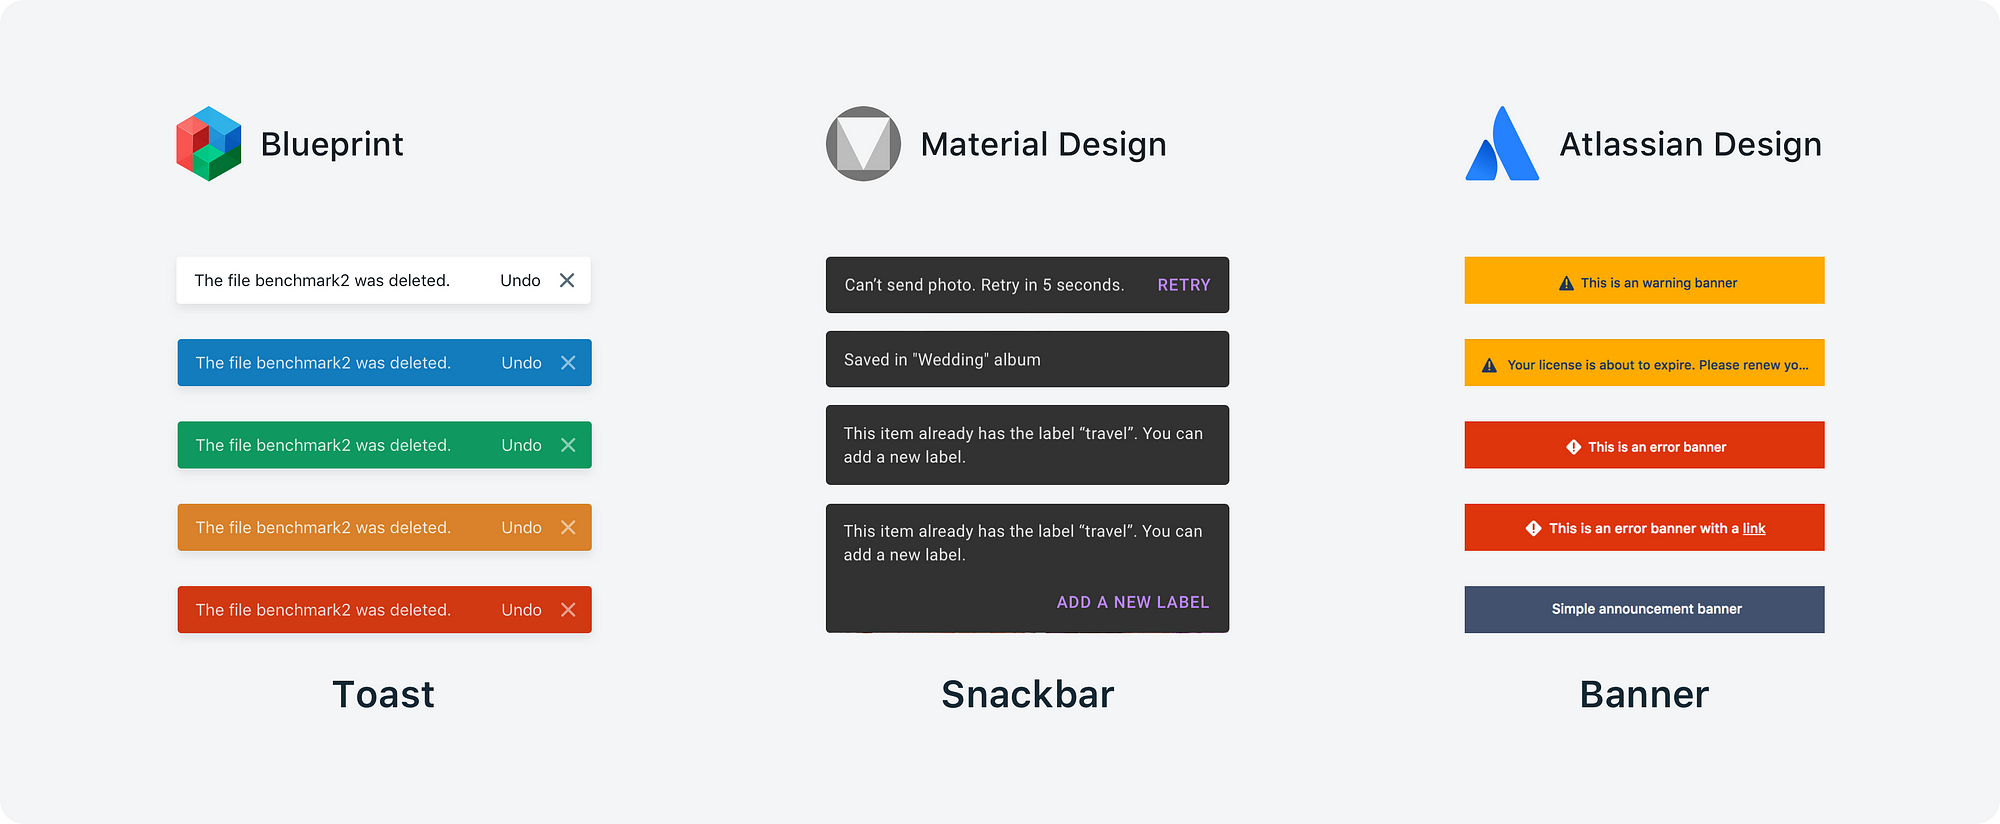 Snackbars - Material Design